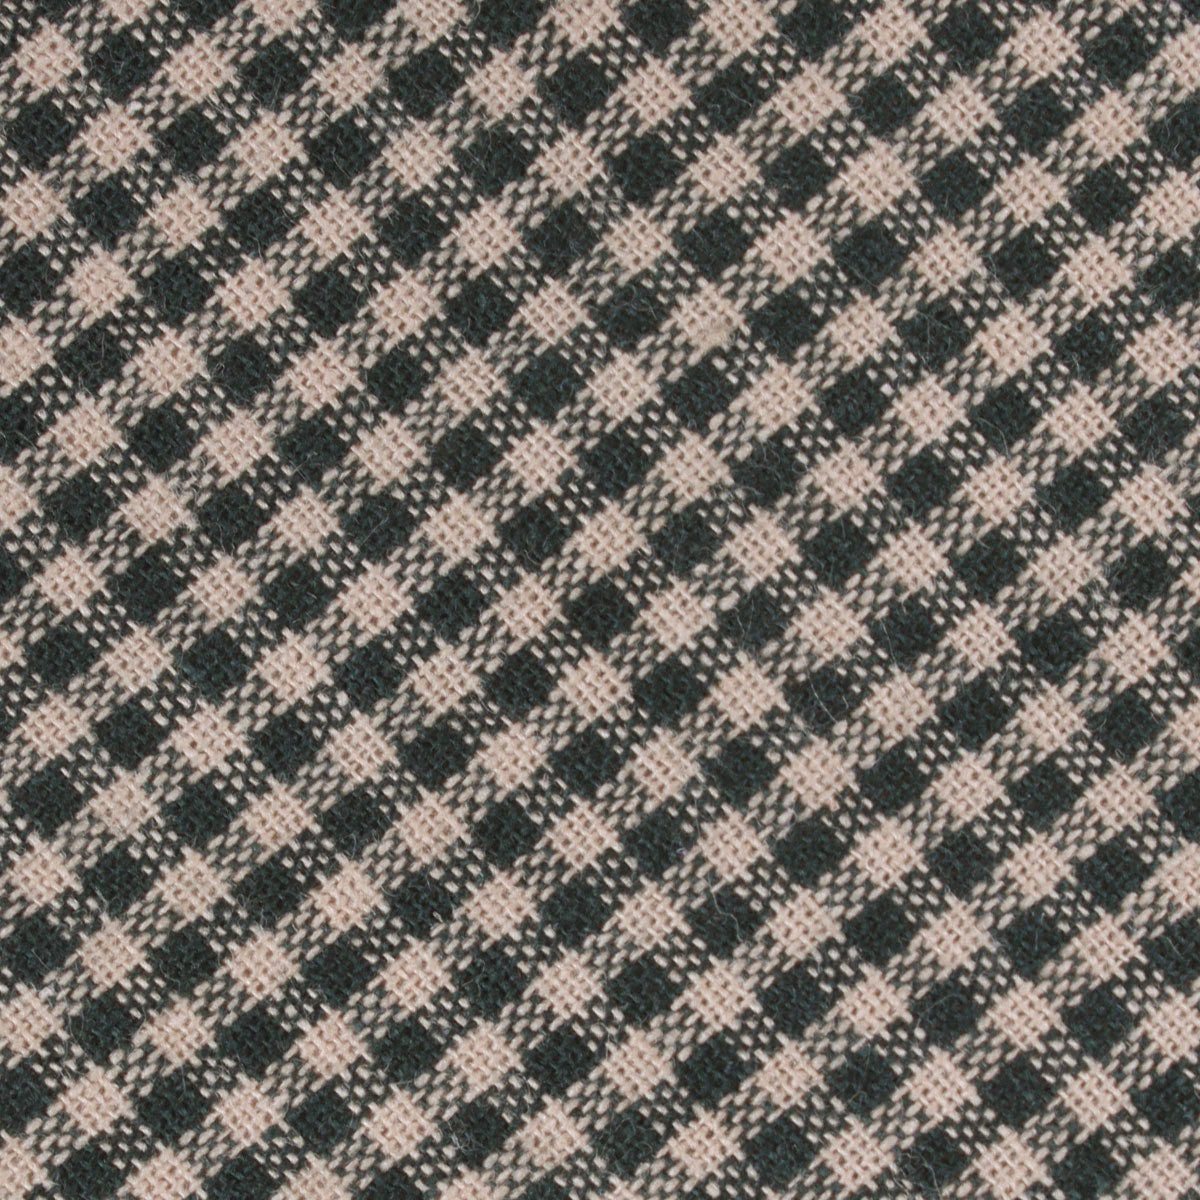 Khaki Green Gingham Blend Fabric Pocket Square